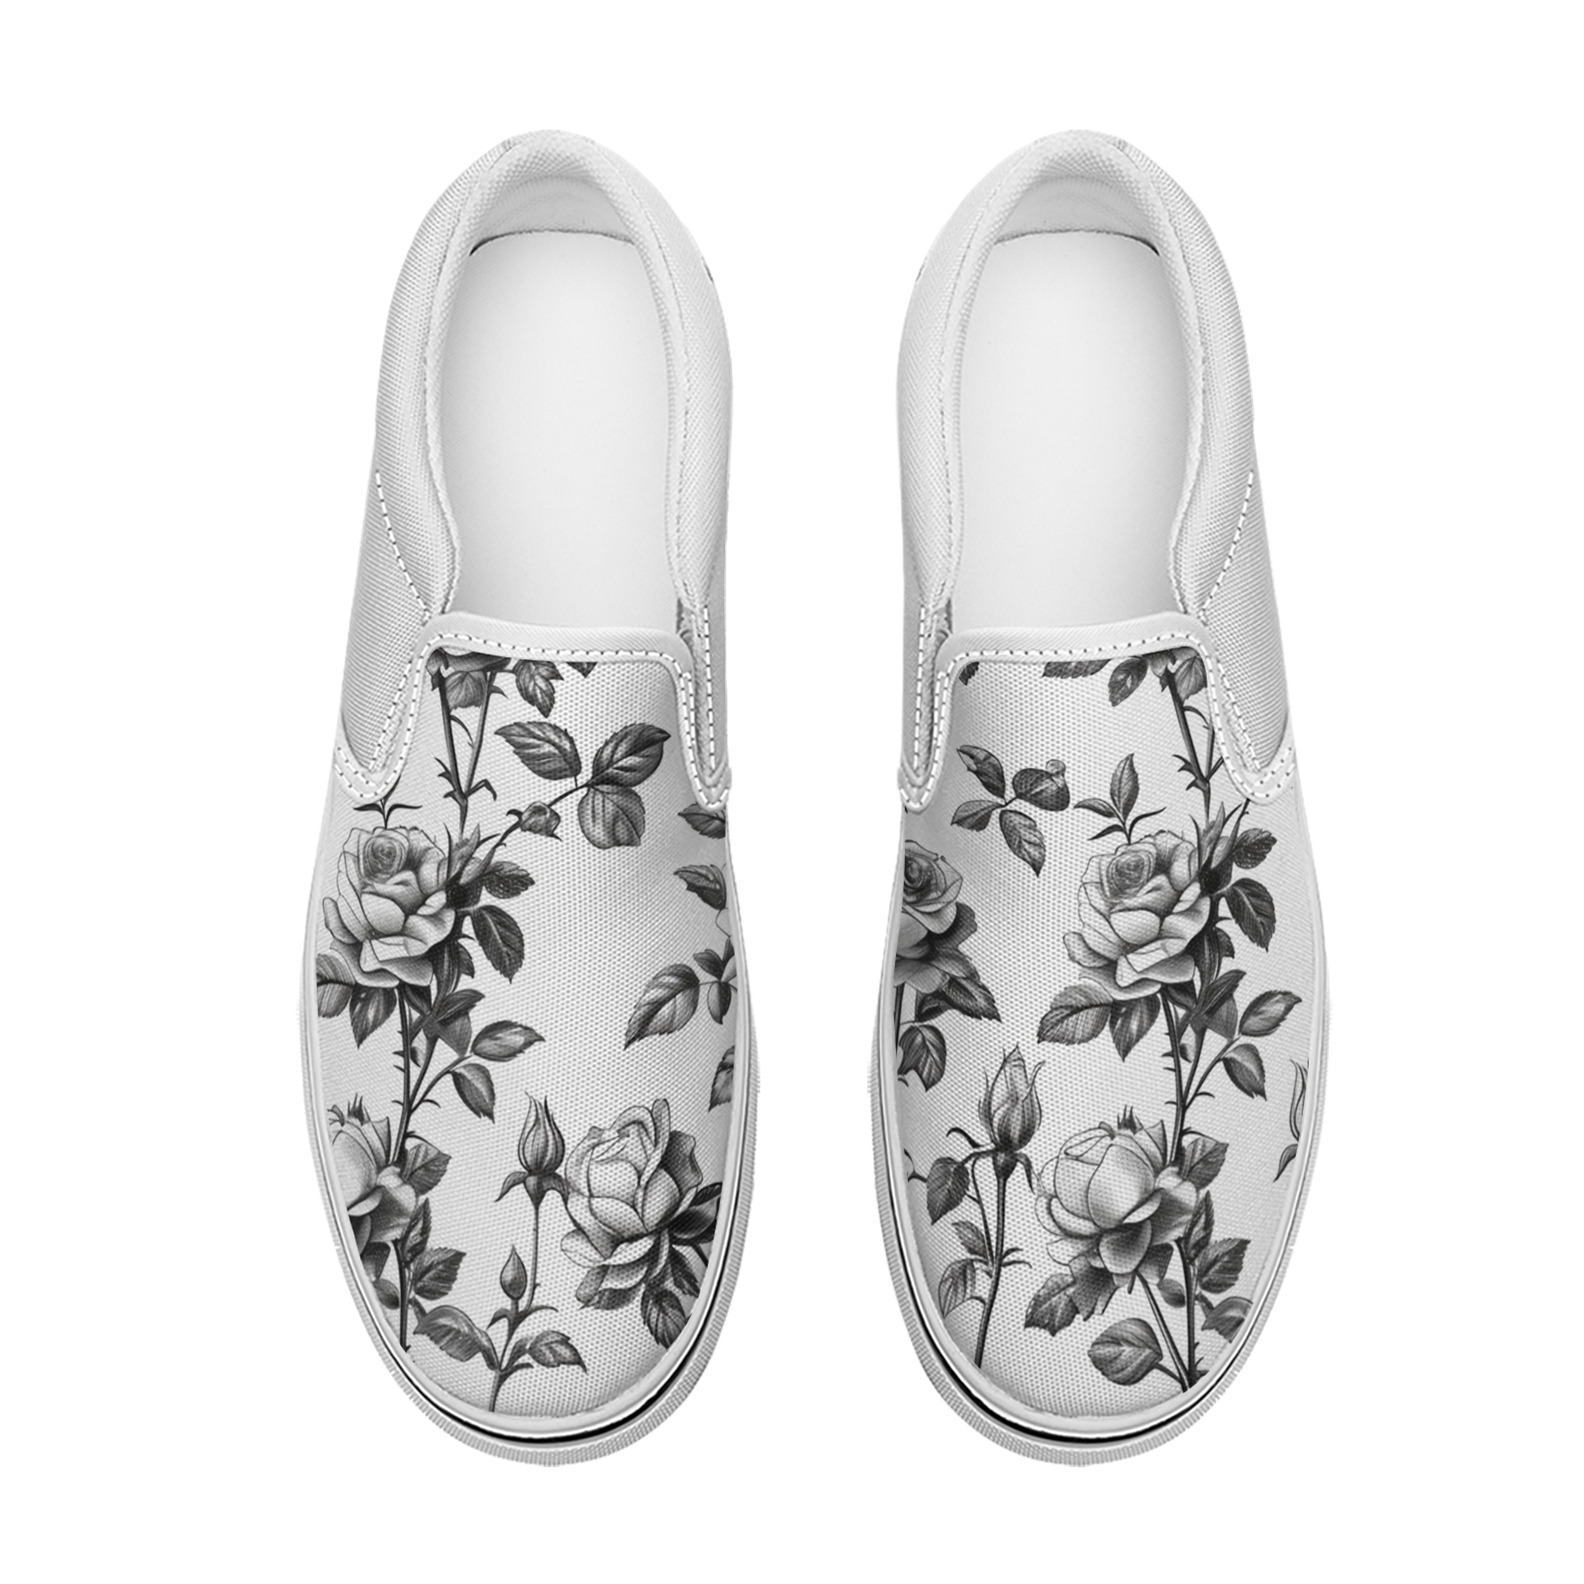 Women's Fashion Flowers Pattern Slip On Canvas Sneaker Low Top Casual Walking Shoes Classic Comfort Flat Fashion Sneakers